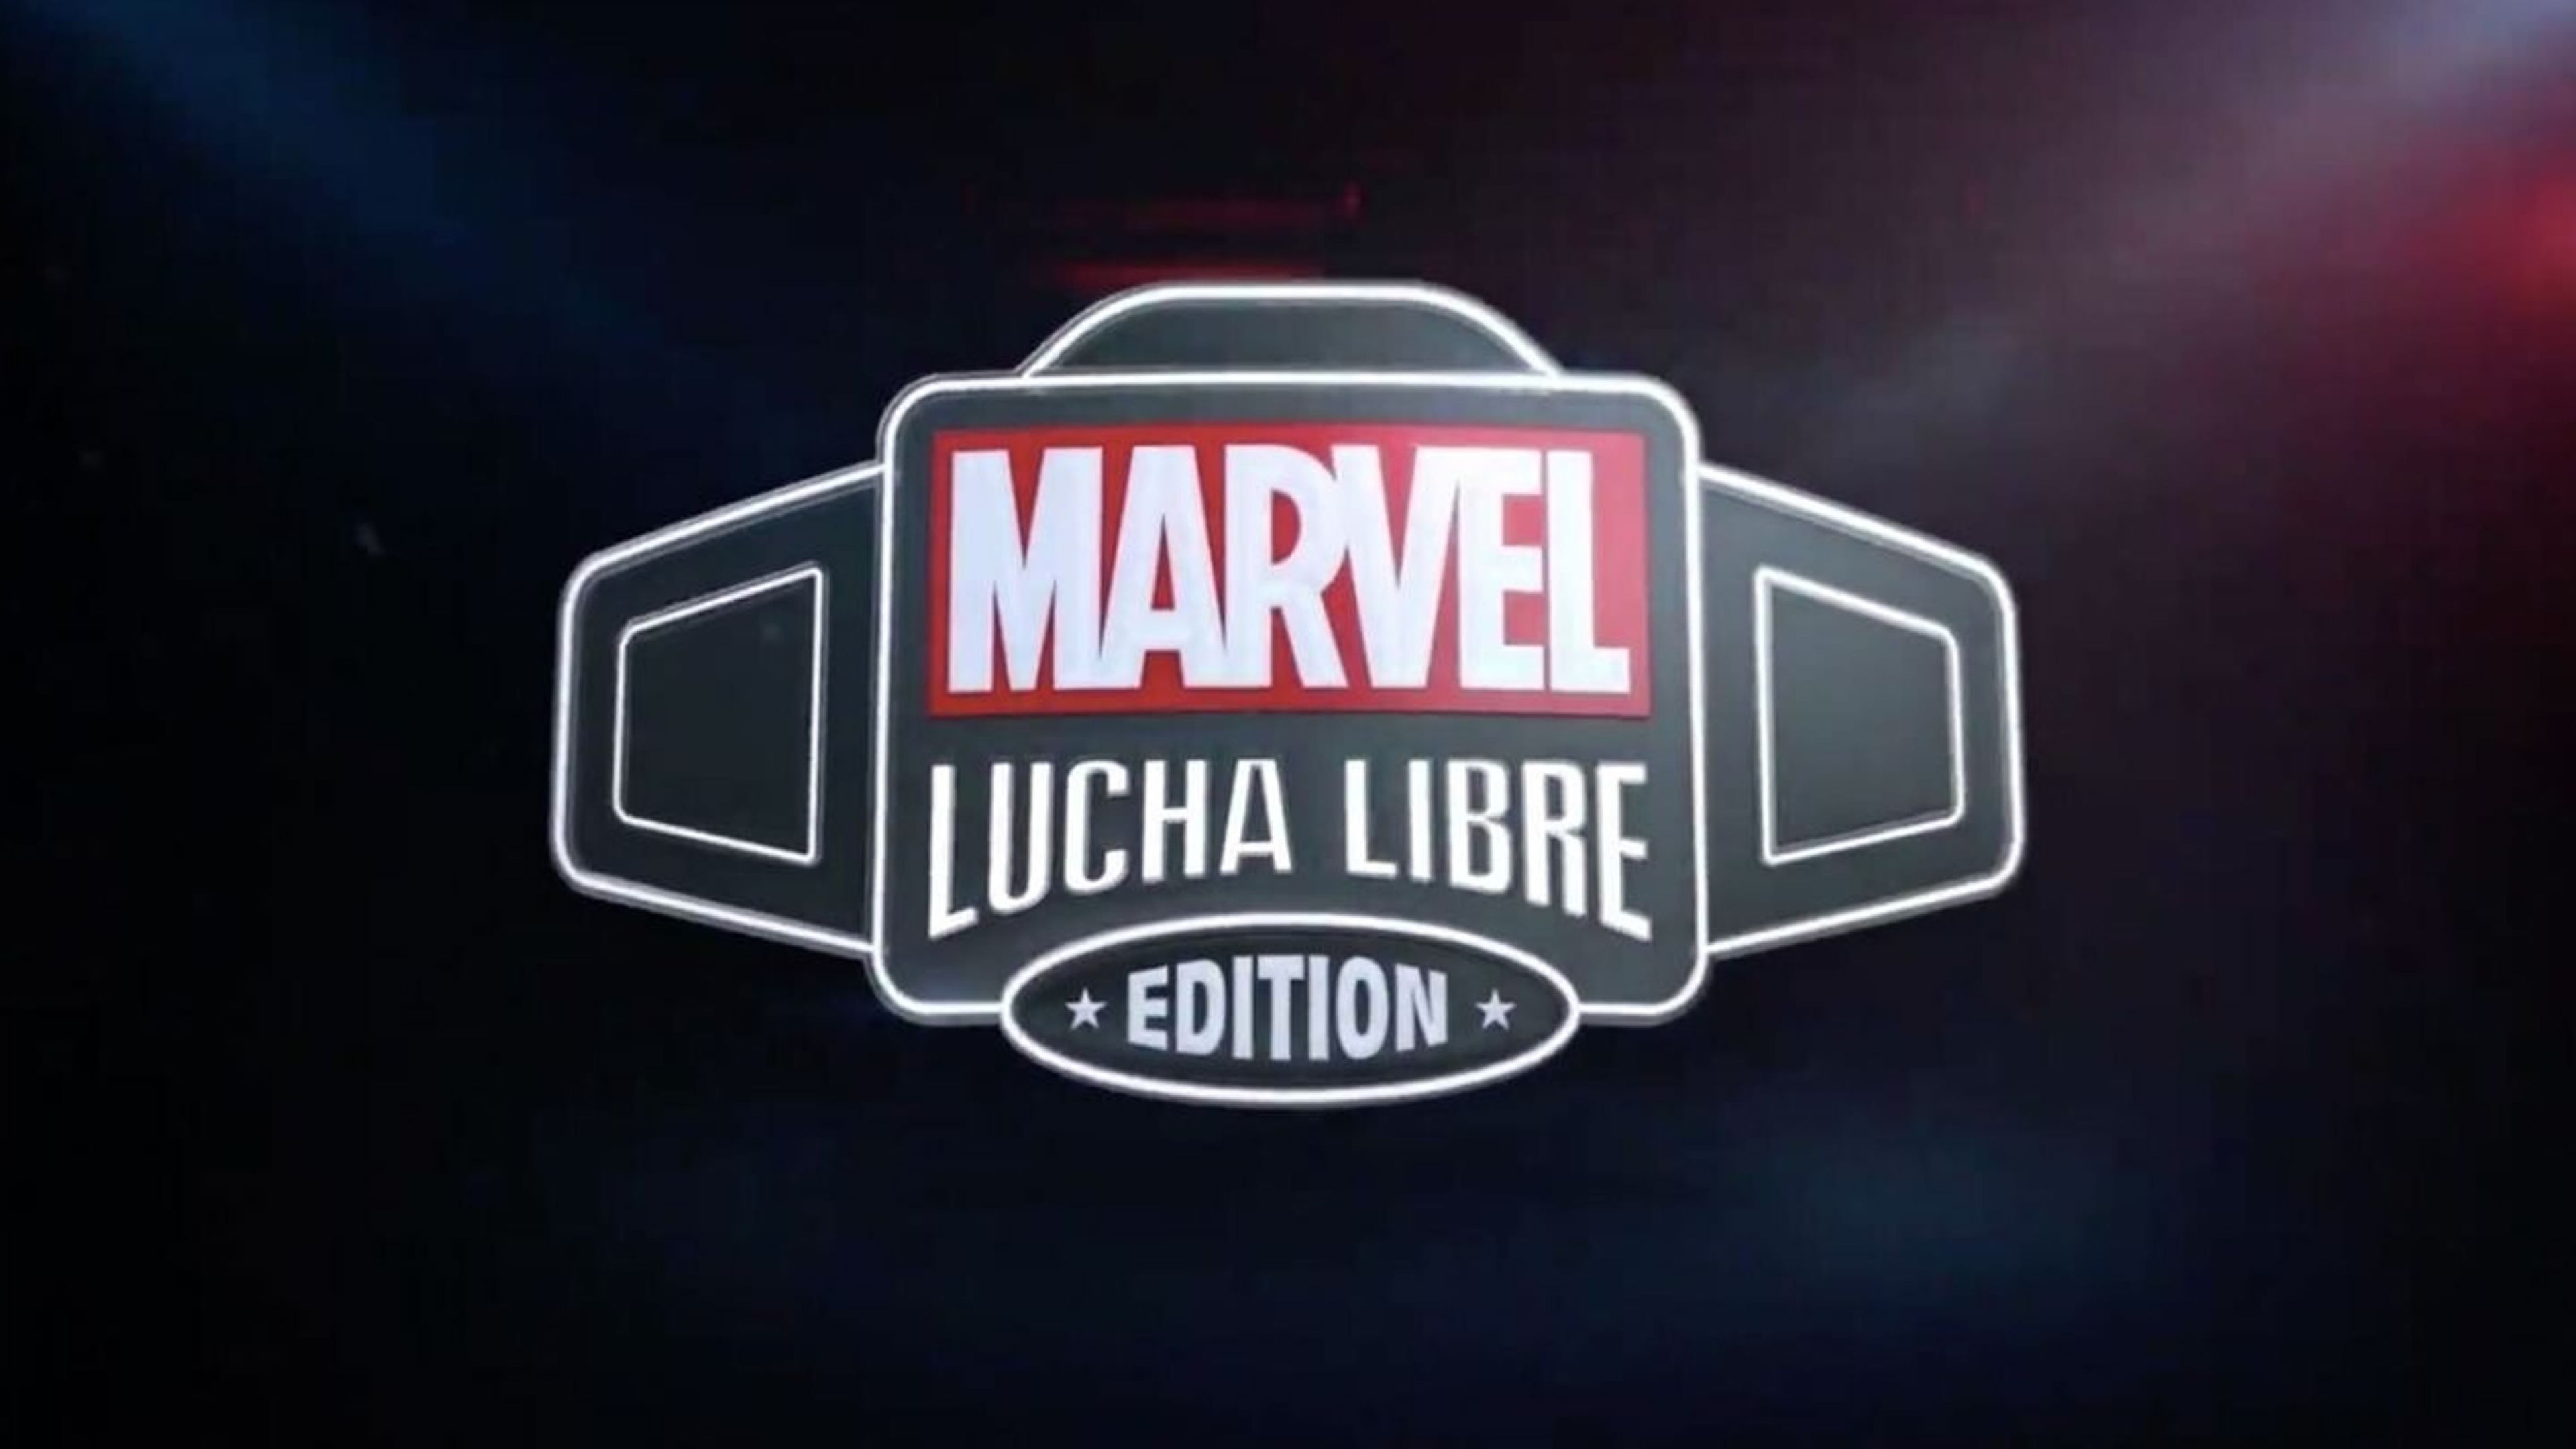 Marvel Lucha Libre